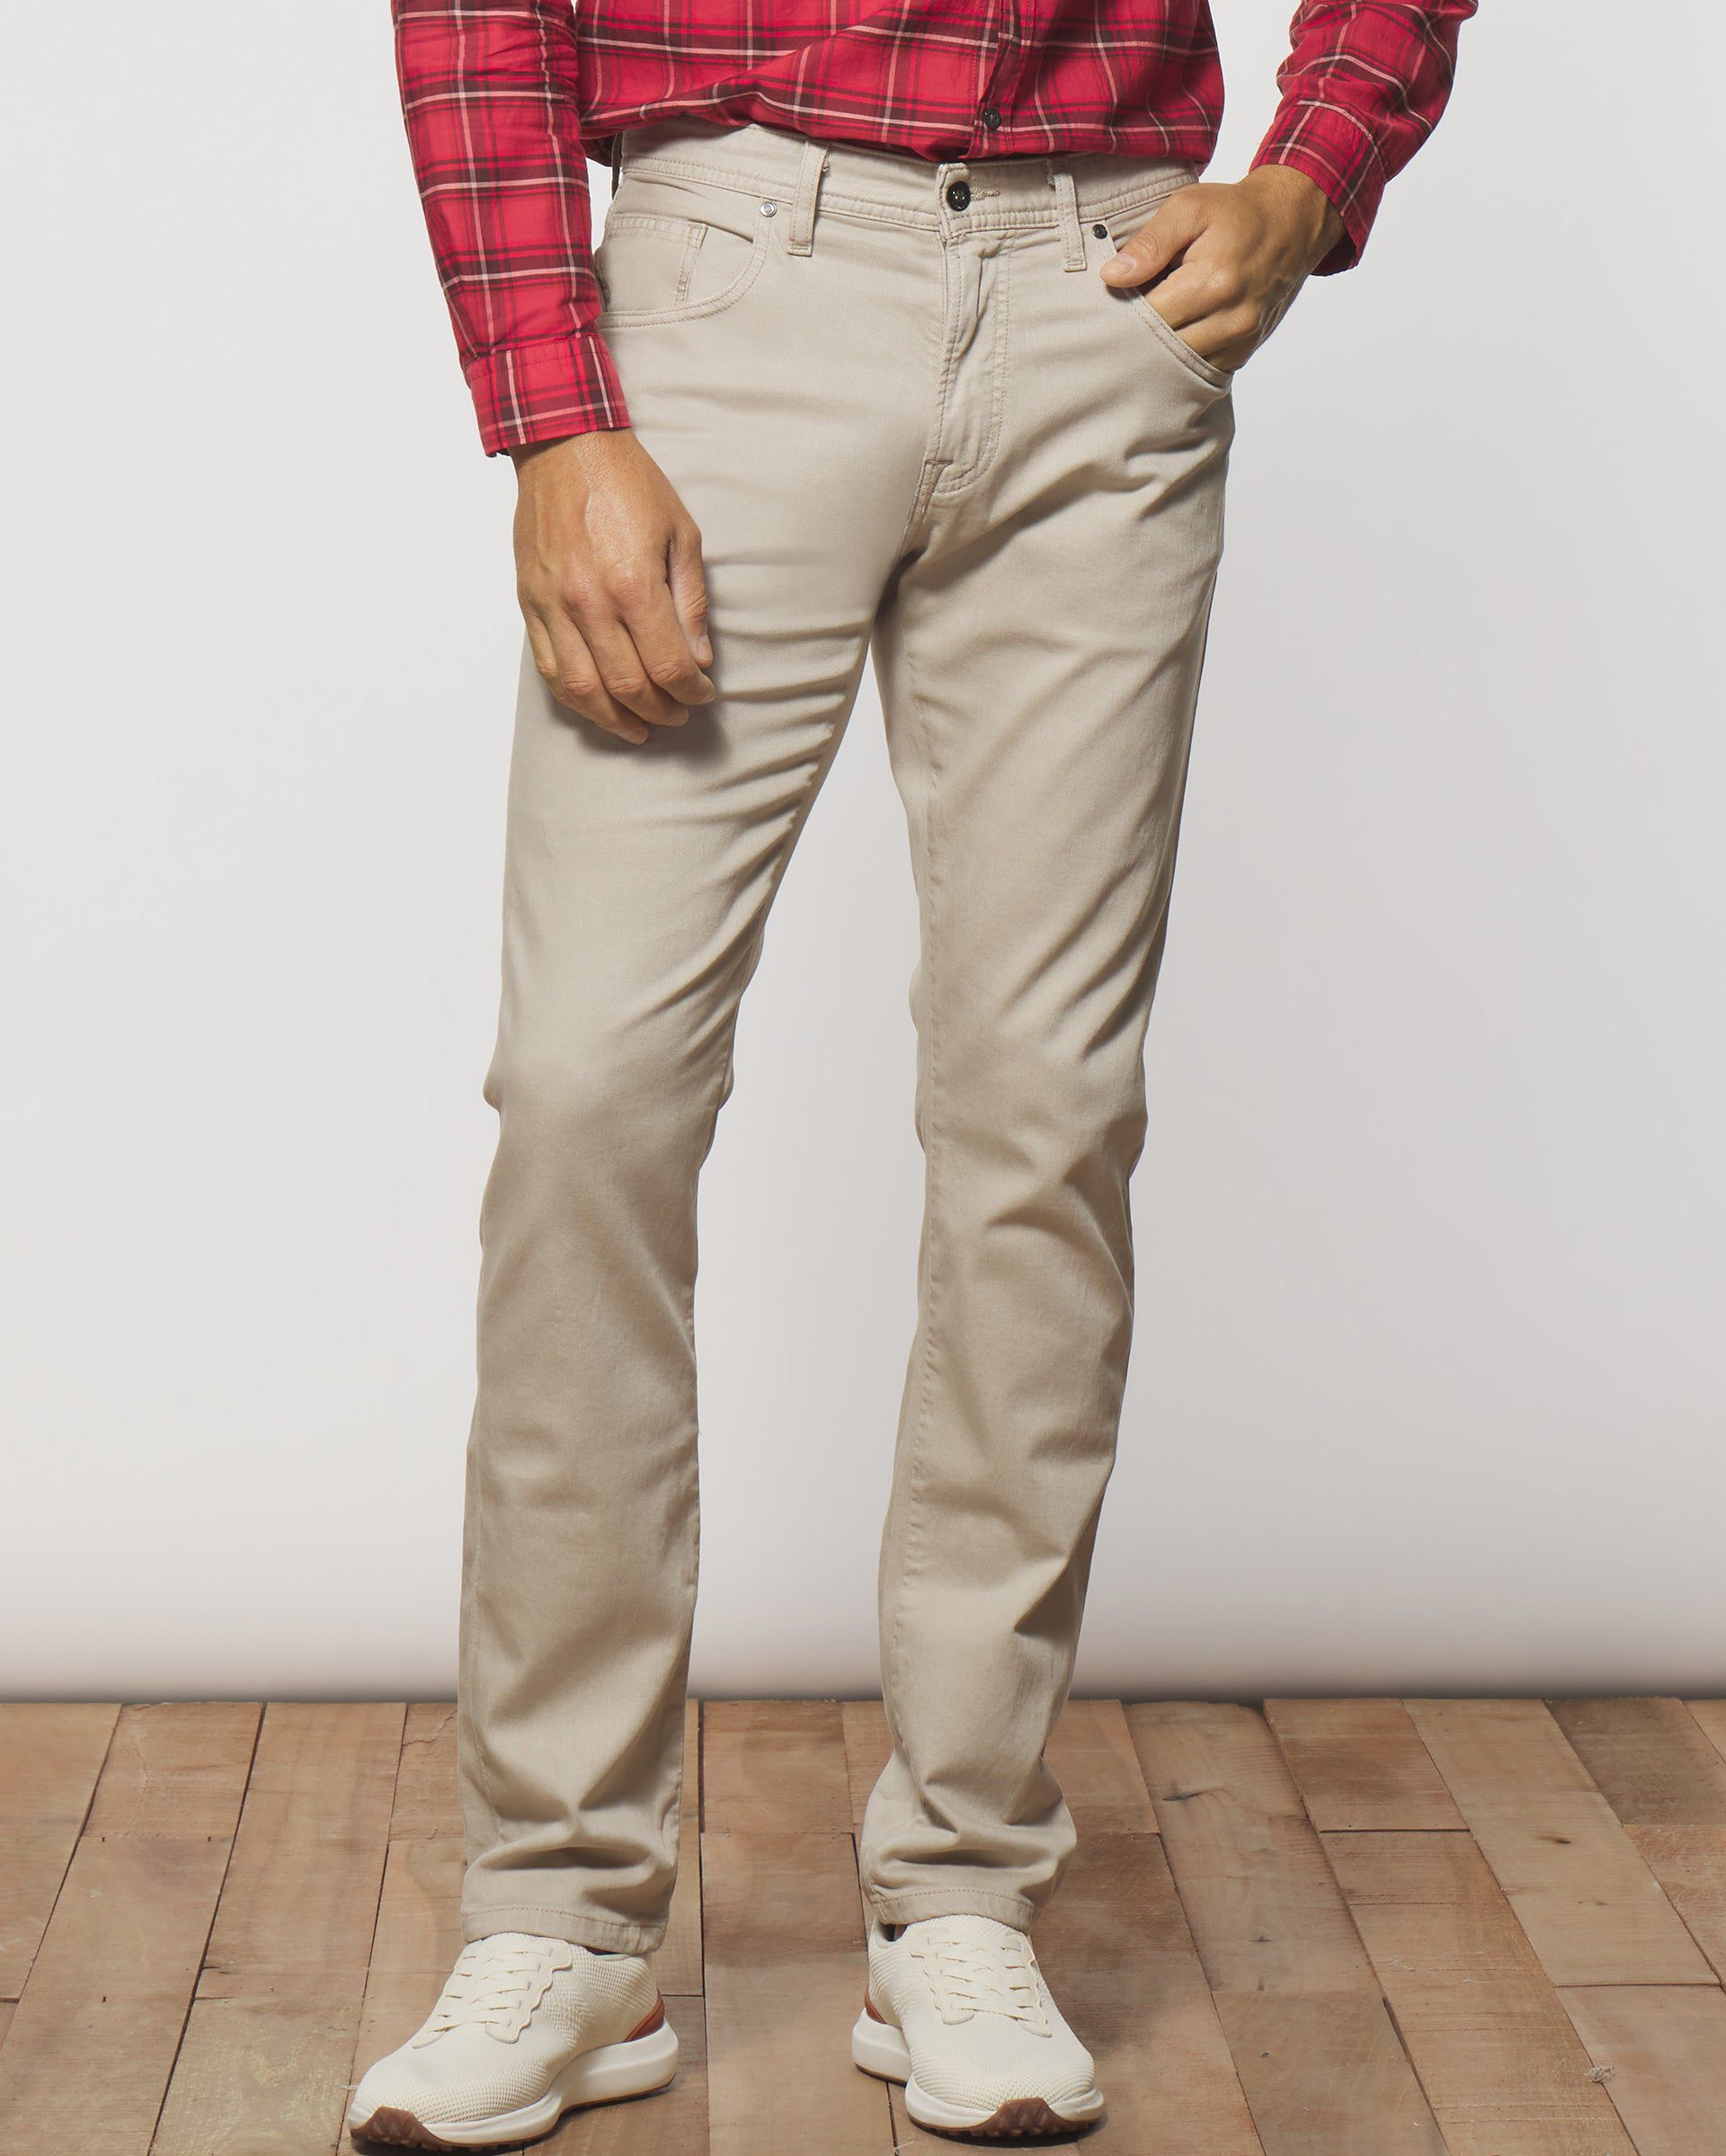 & Trousers Light Khaki Trousers | Khaki trousers, Trousers, Khaki